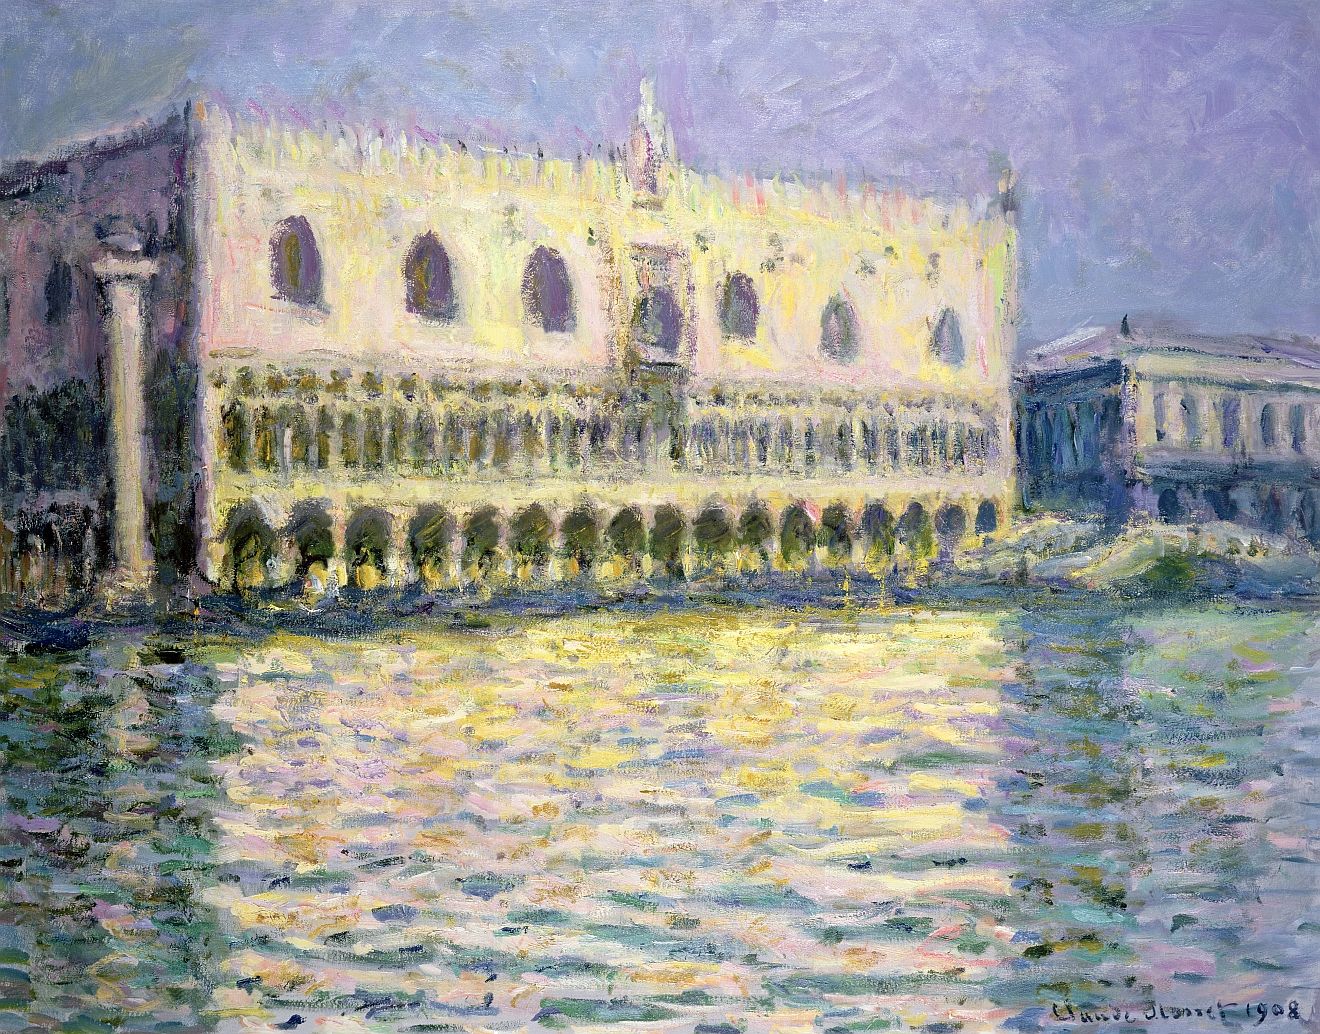 Claude+Monet-1840-1926 (442).jpg